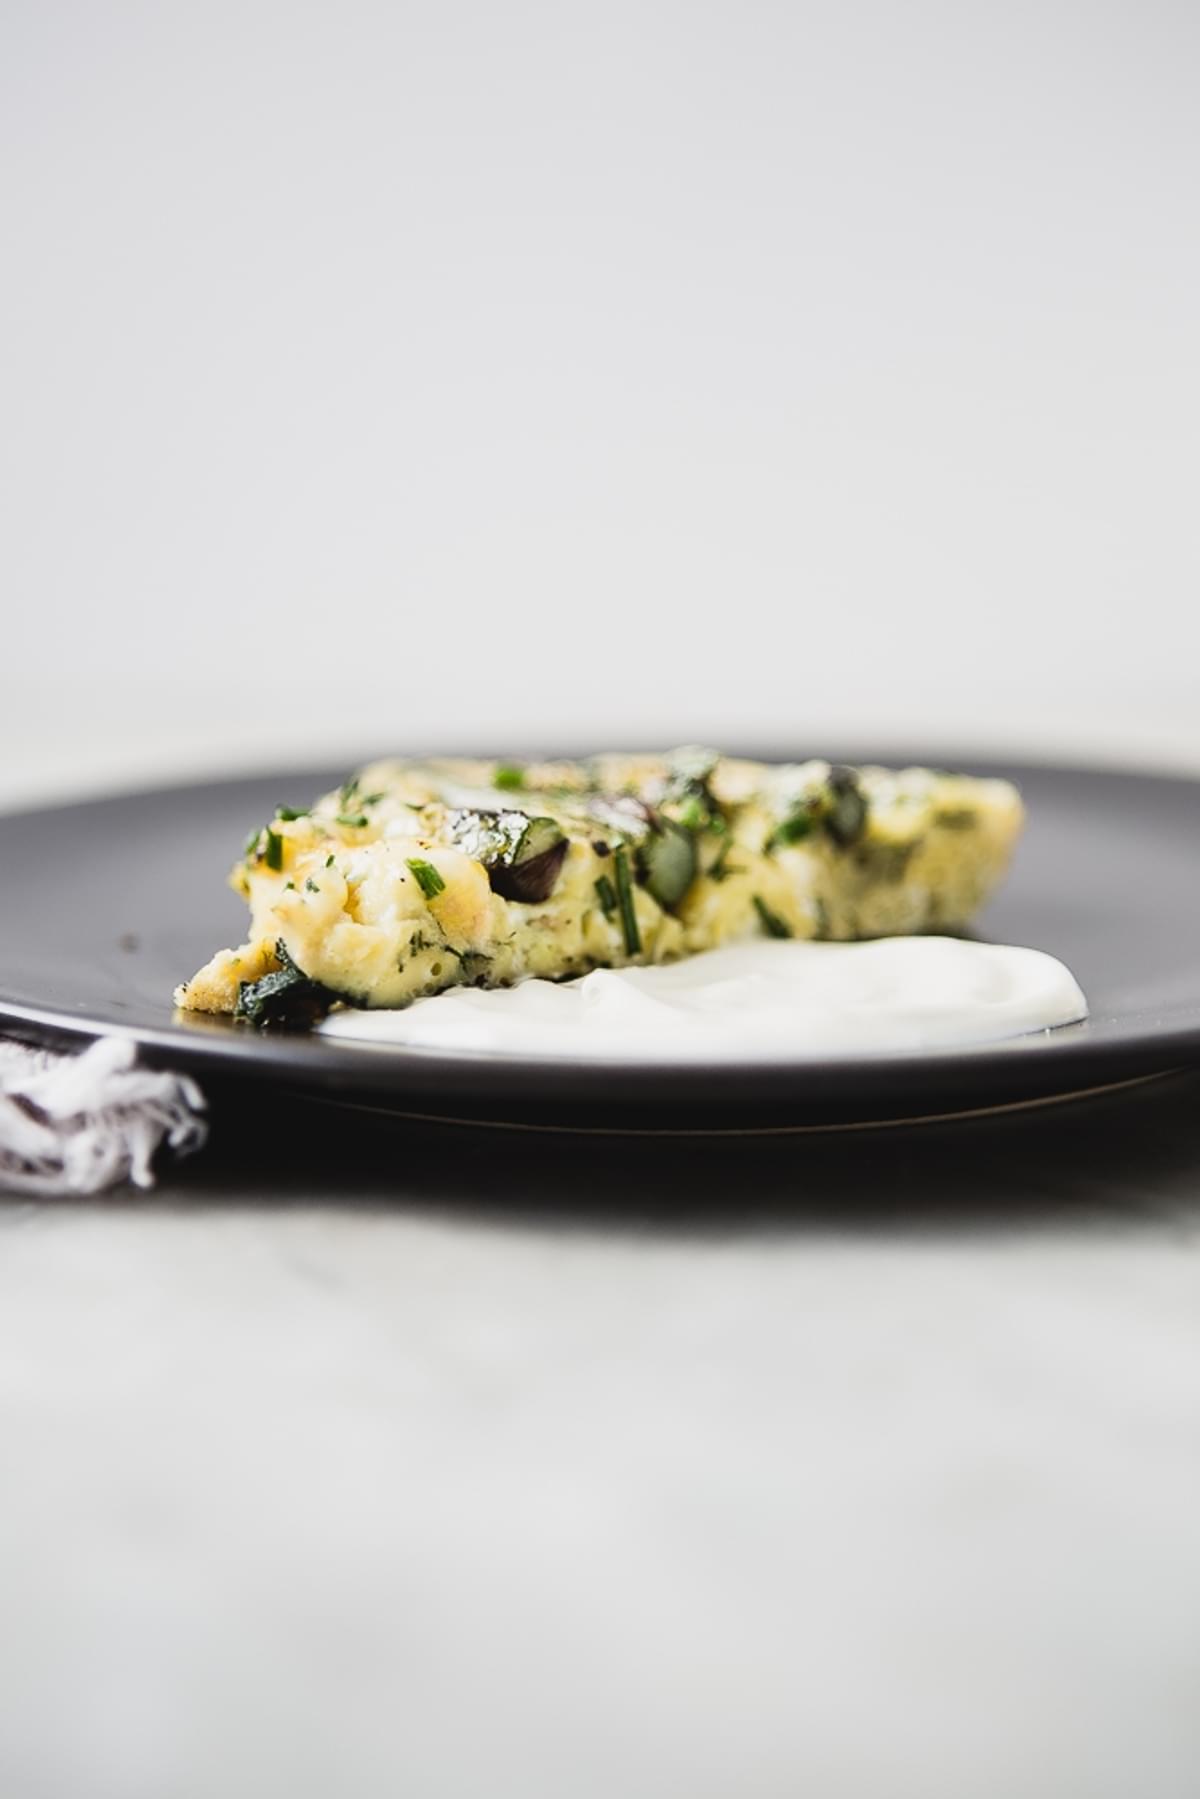 Slice of Spring Asparagus Frittata With Crème Fraîche on a plate